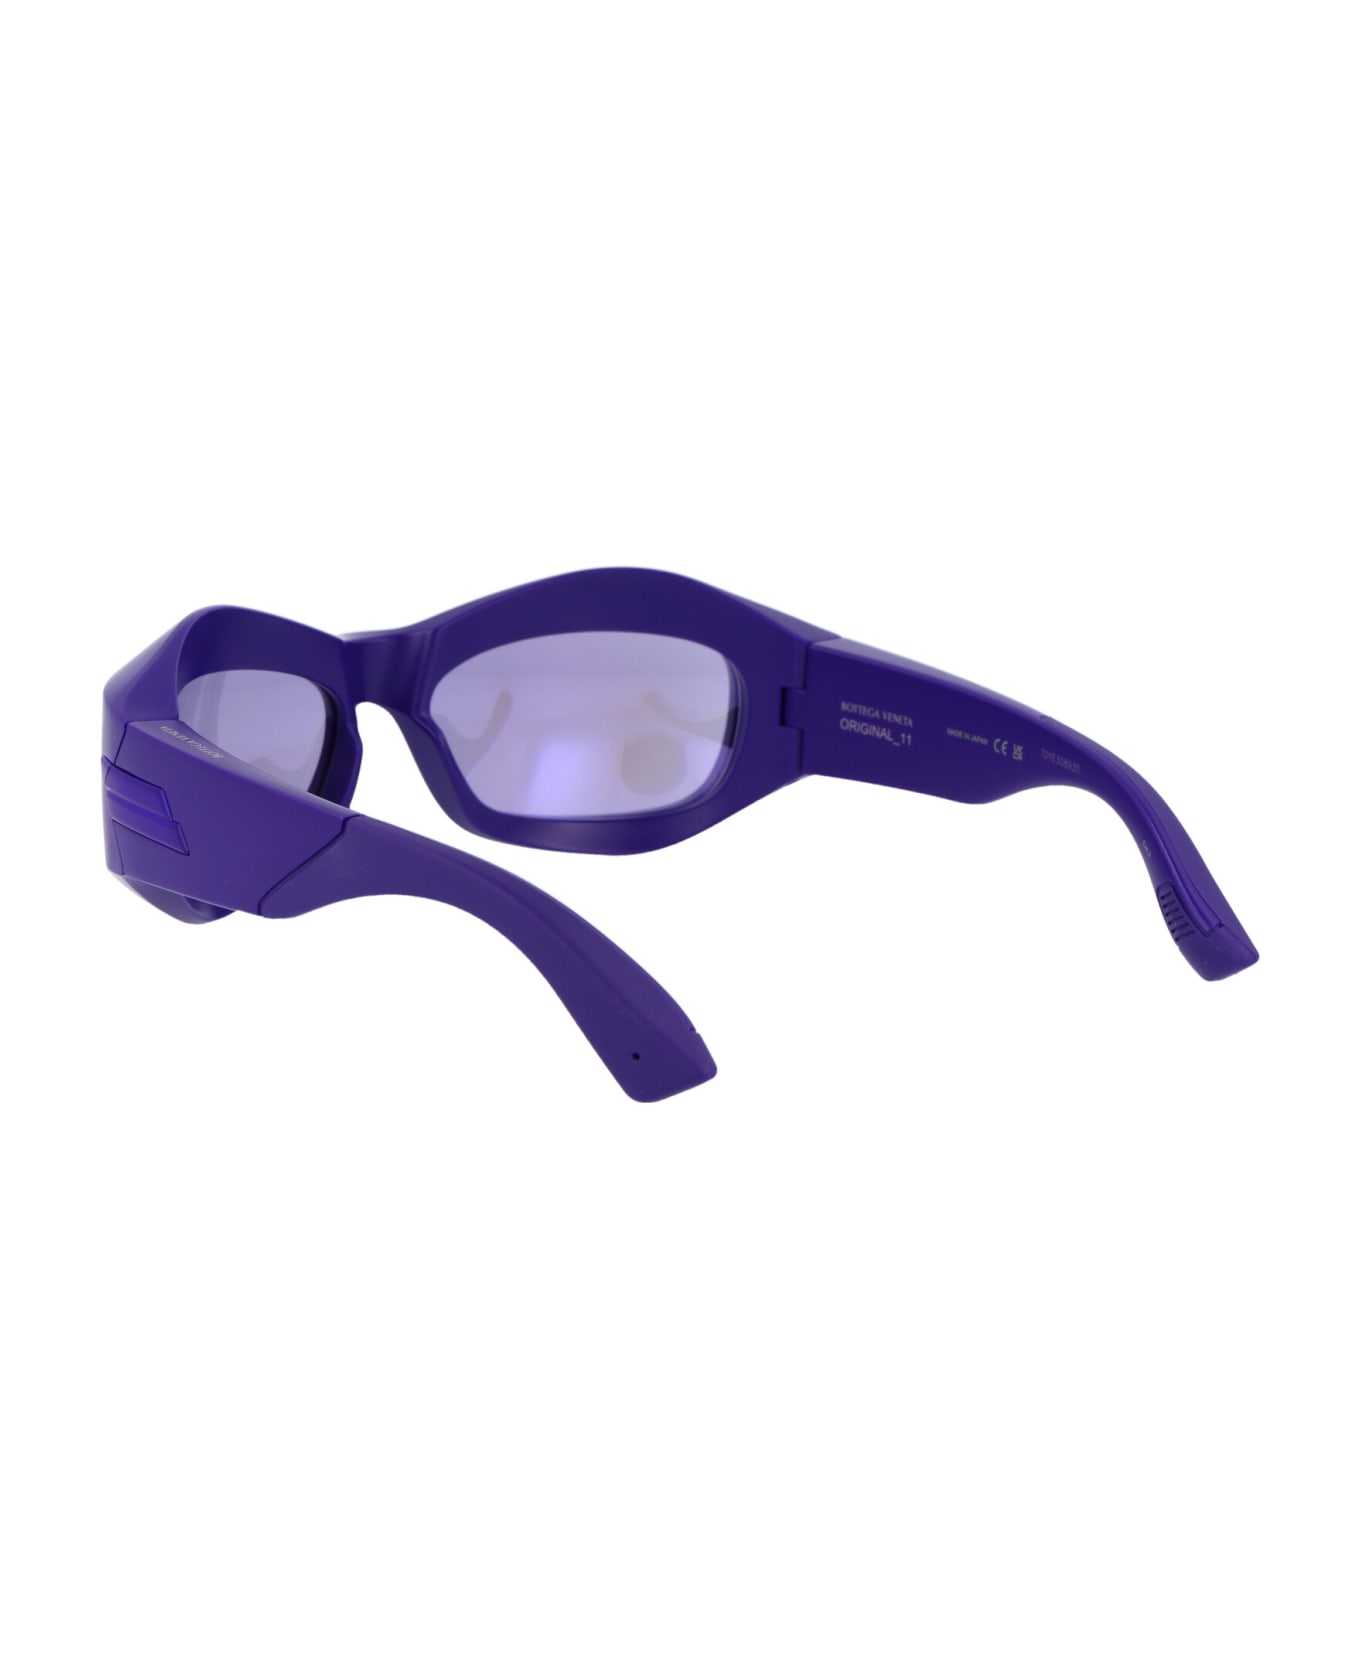 Bottega Veneta Eyewear Bv1086s Sunglasses - 008 VIOLET VIOLET VIOLET